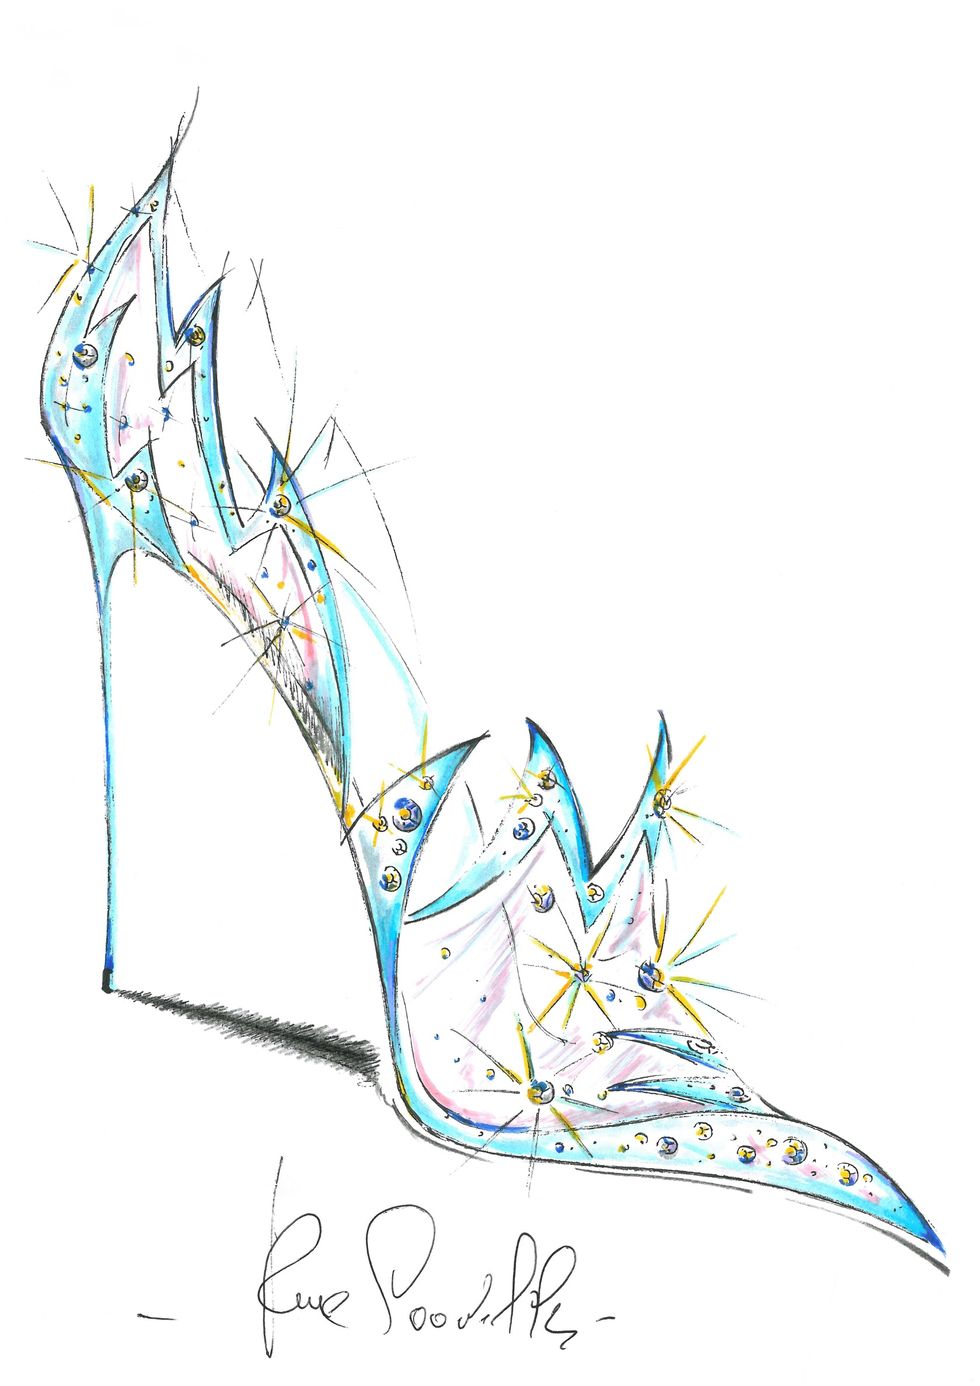 Cinderella's new slippers designed by Renee Caovilla